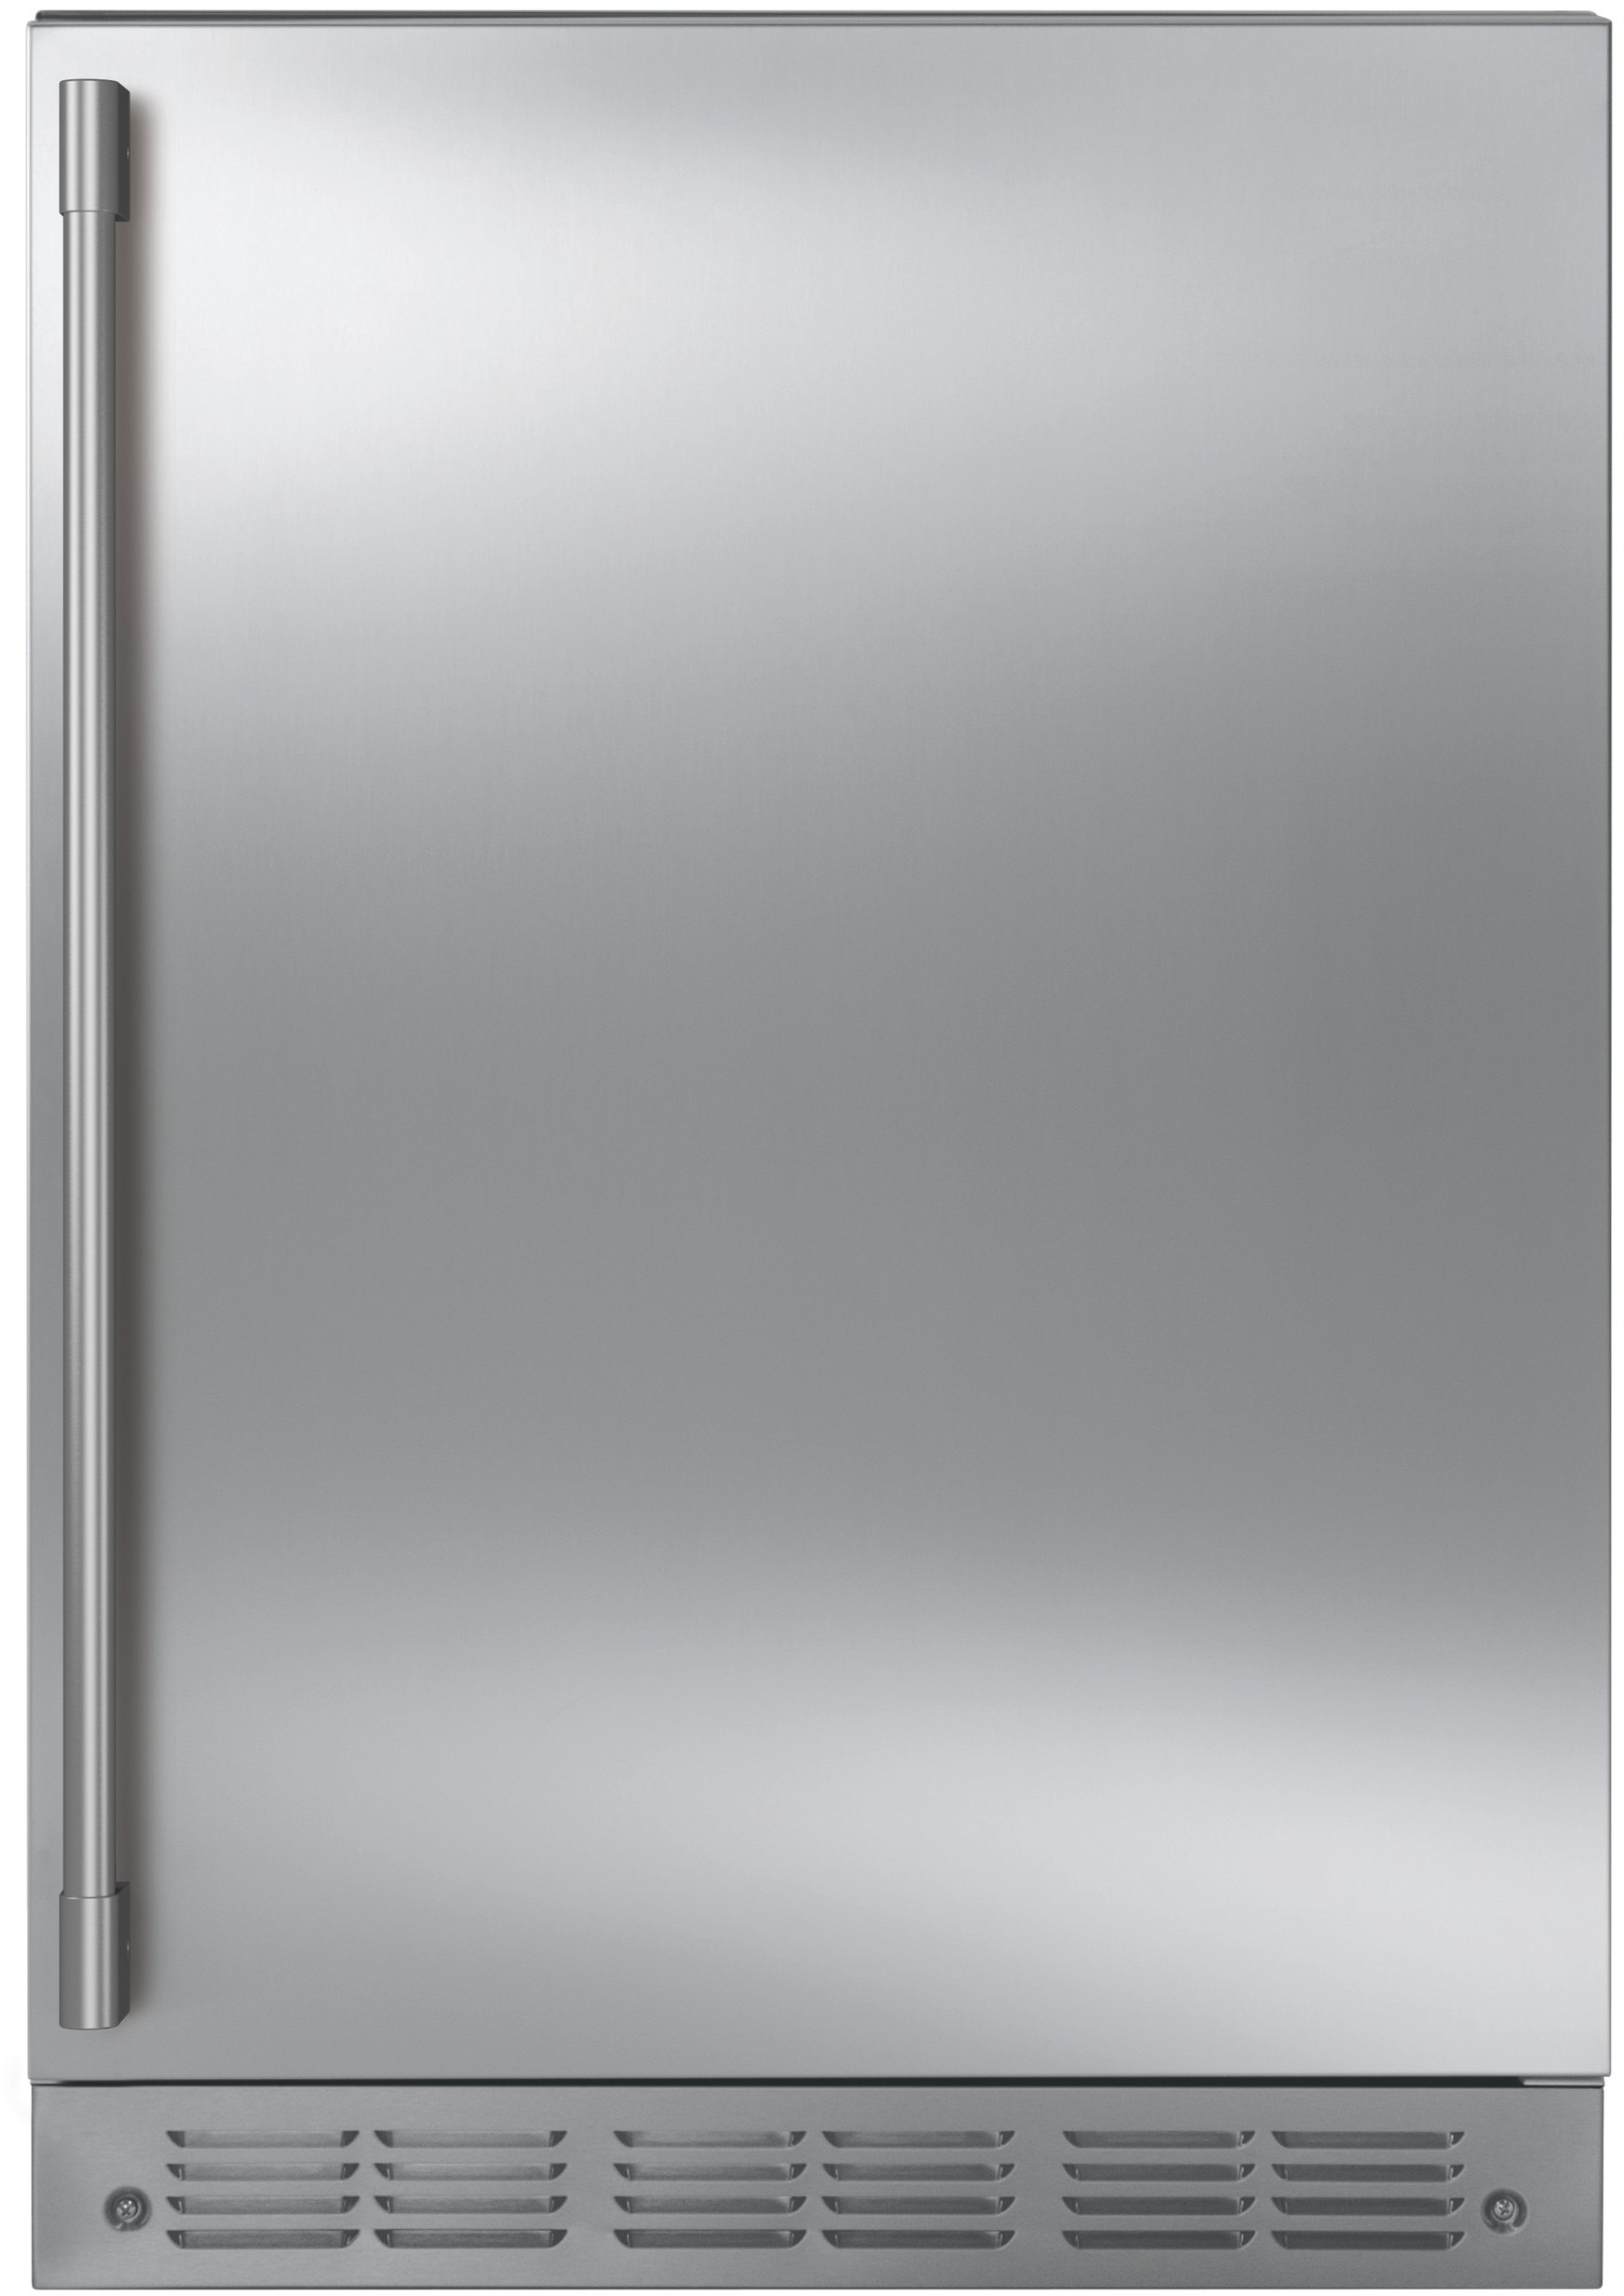 Monogram 24 Inch 24 Freestanding/Built In Undercounter Counter Depth Compact All-Refrigerator ZIBS240NSS